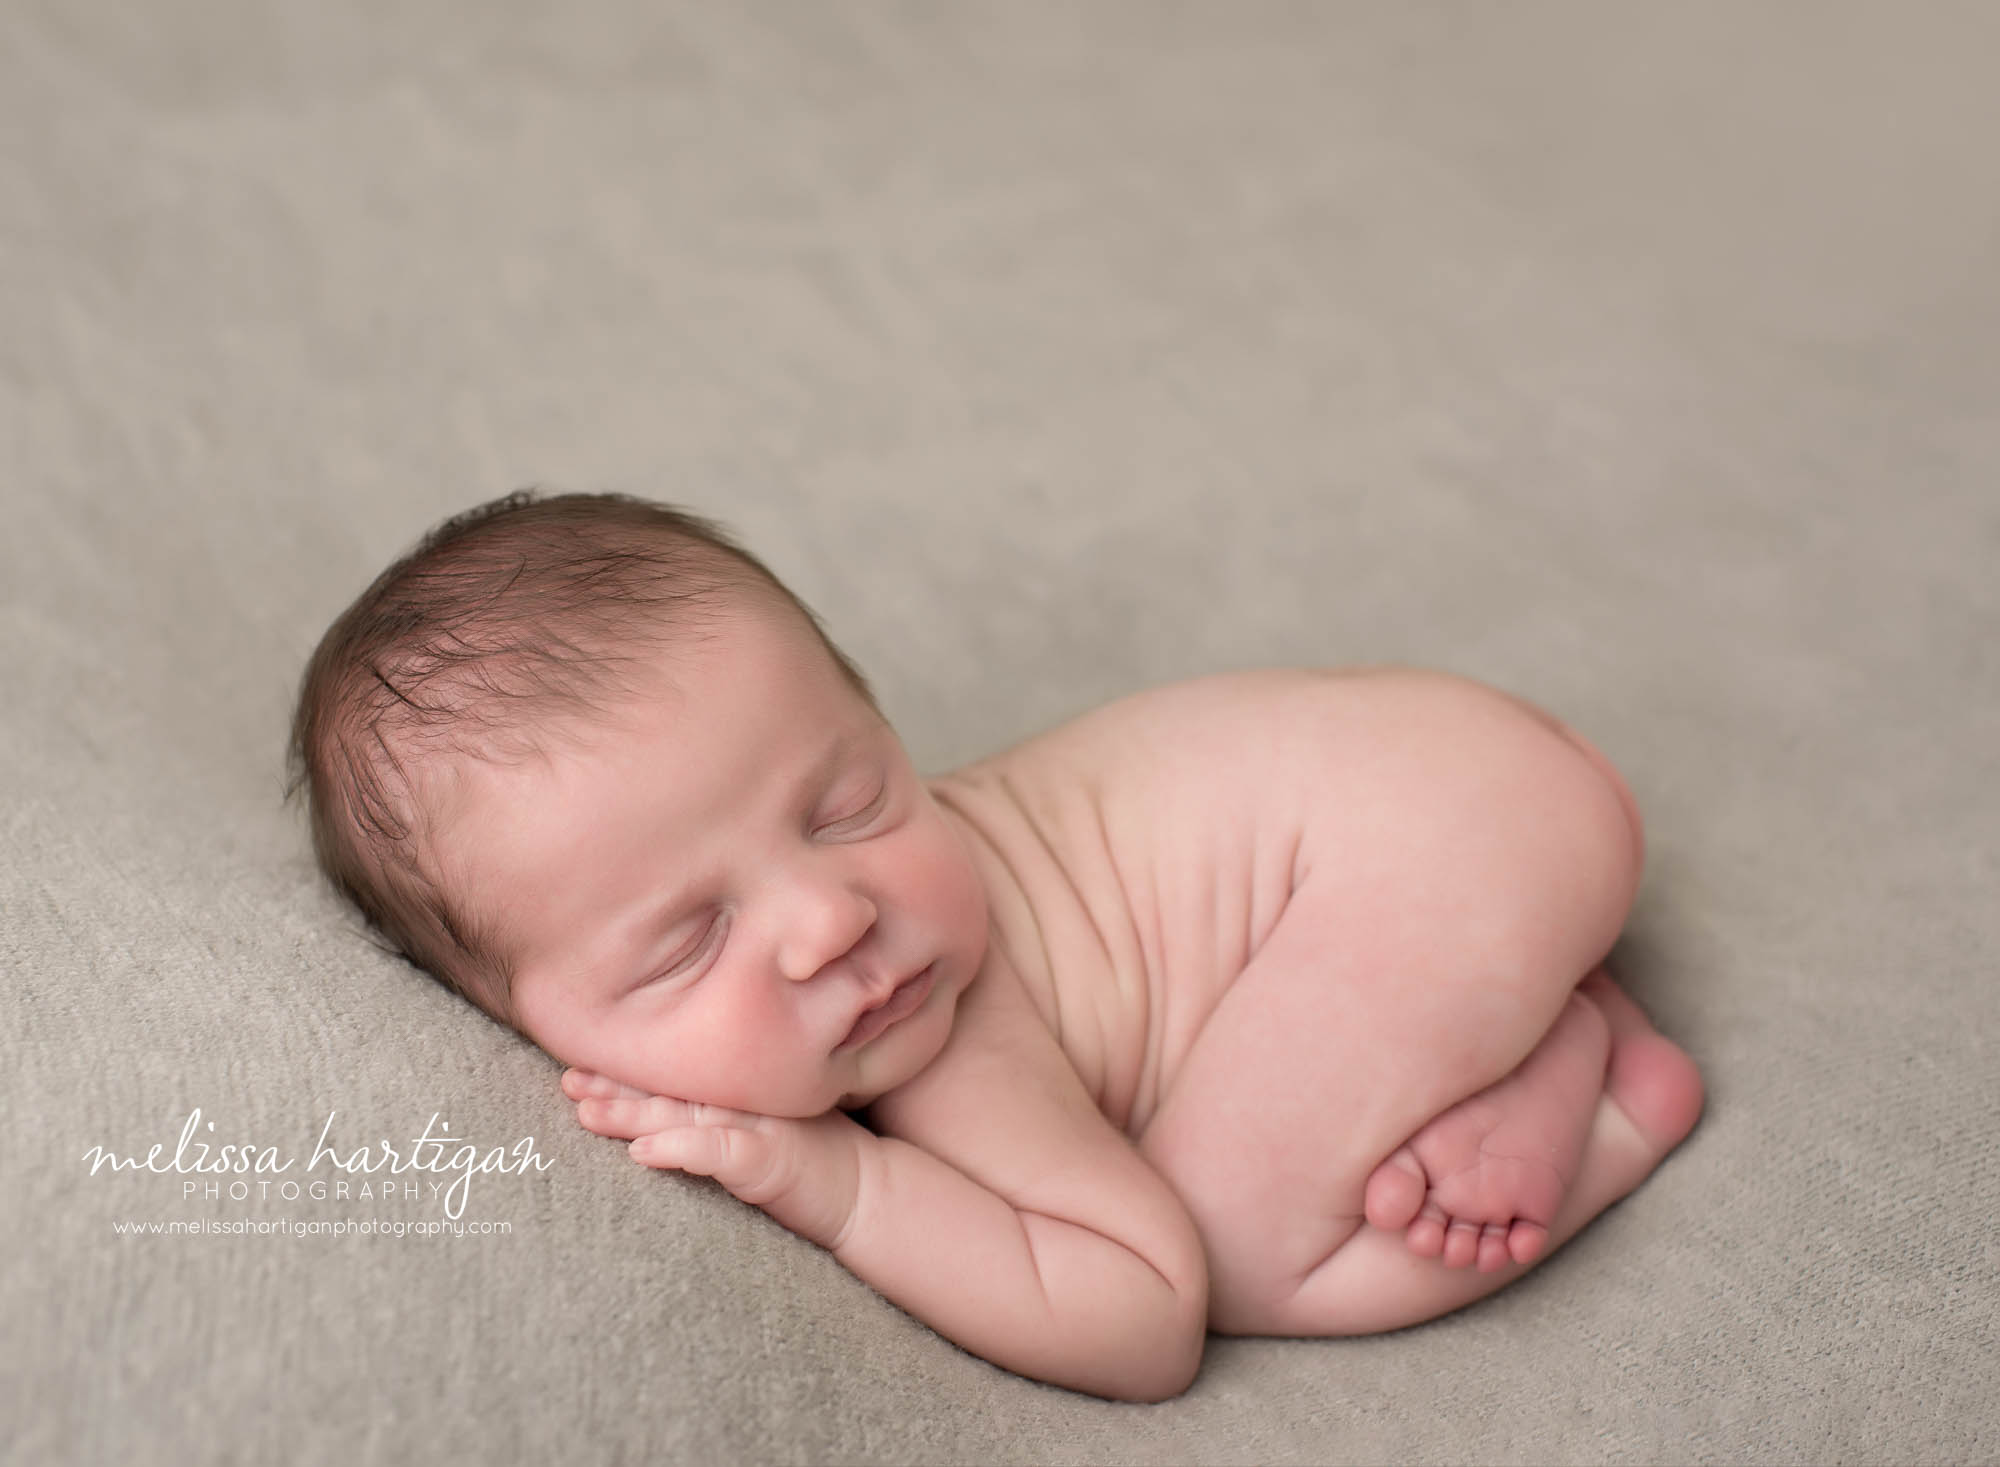 Newborn baby boy posed on tummy newborn photography pose Massachusetts newborn photographer